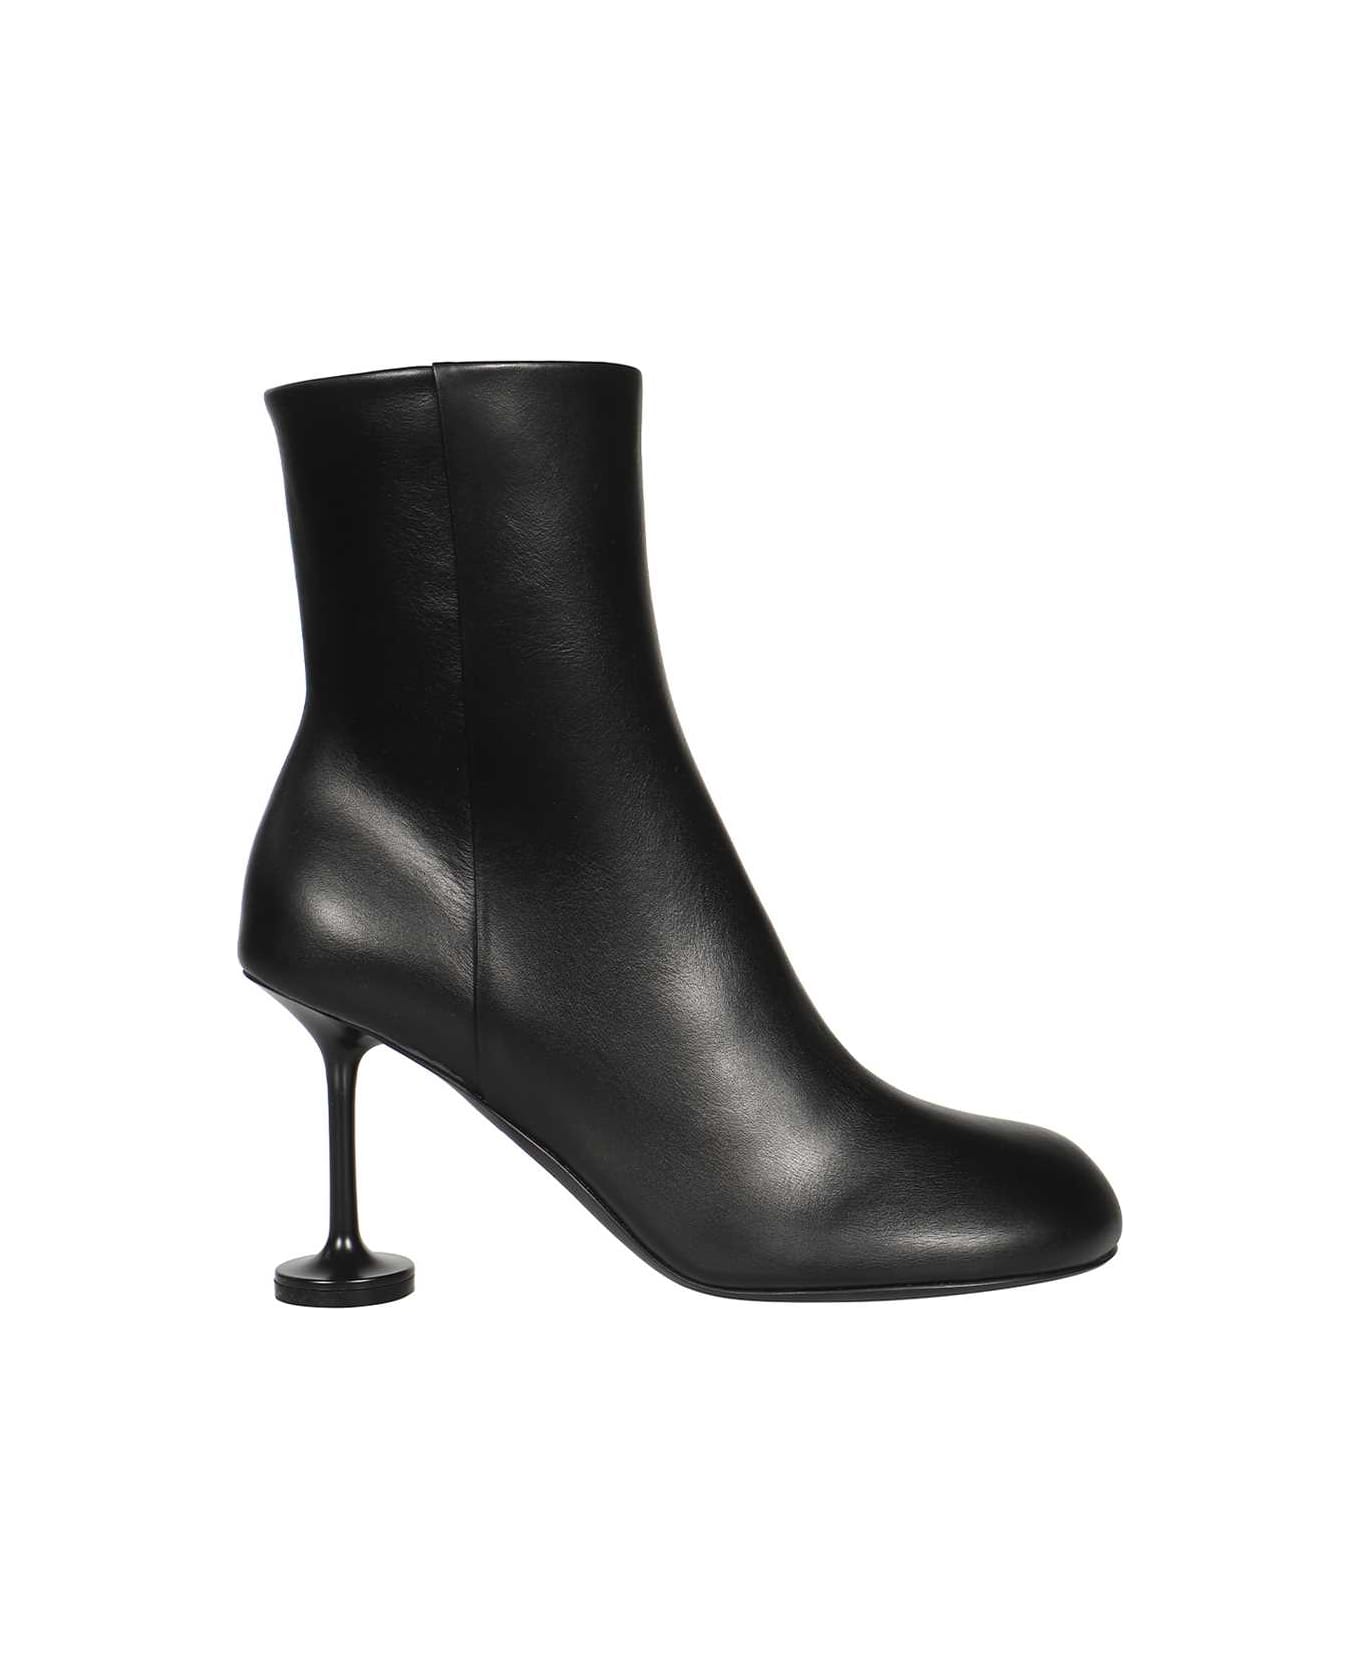 Balenciaga Leather Ankle Boots - black ブーツ